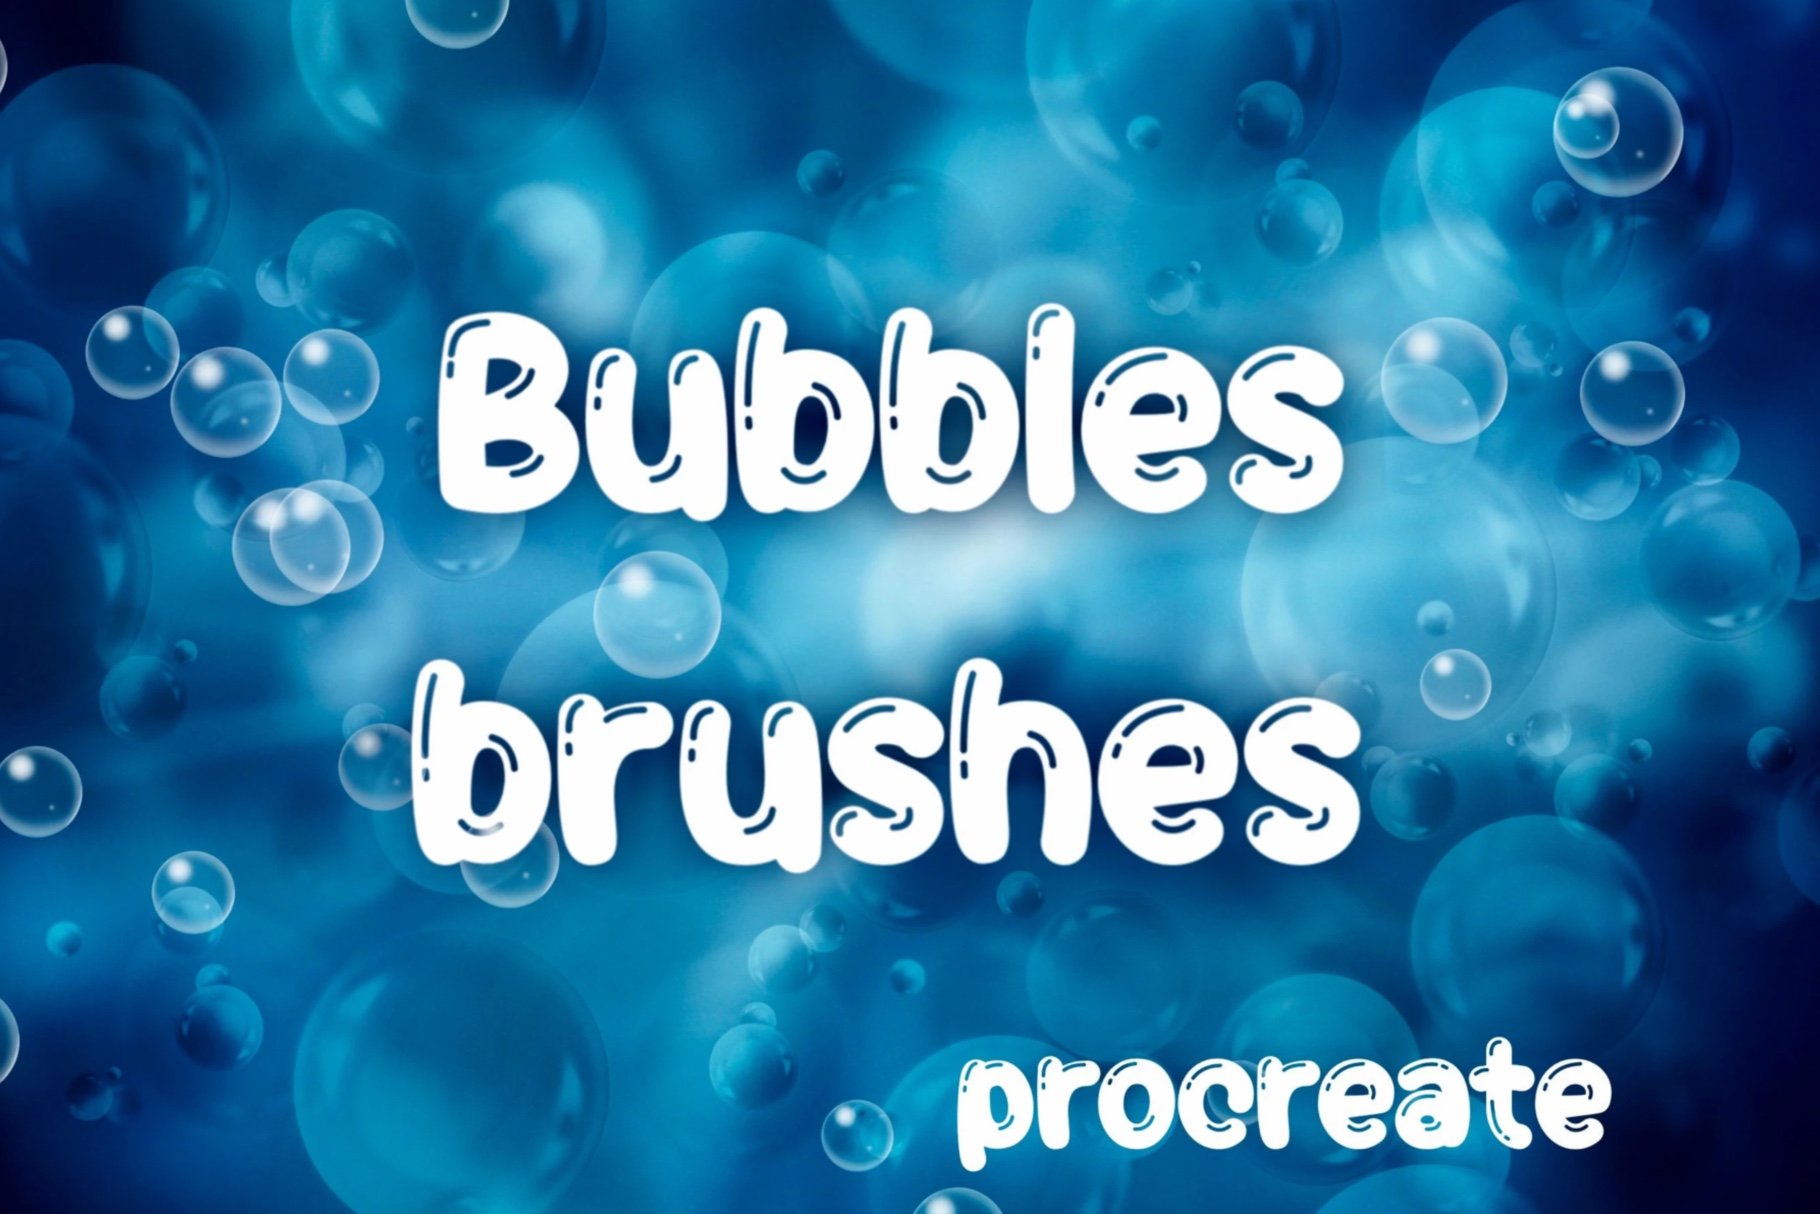 bubble procreate brush free